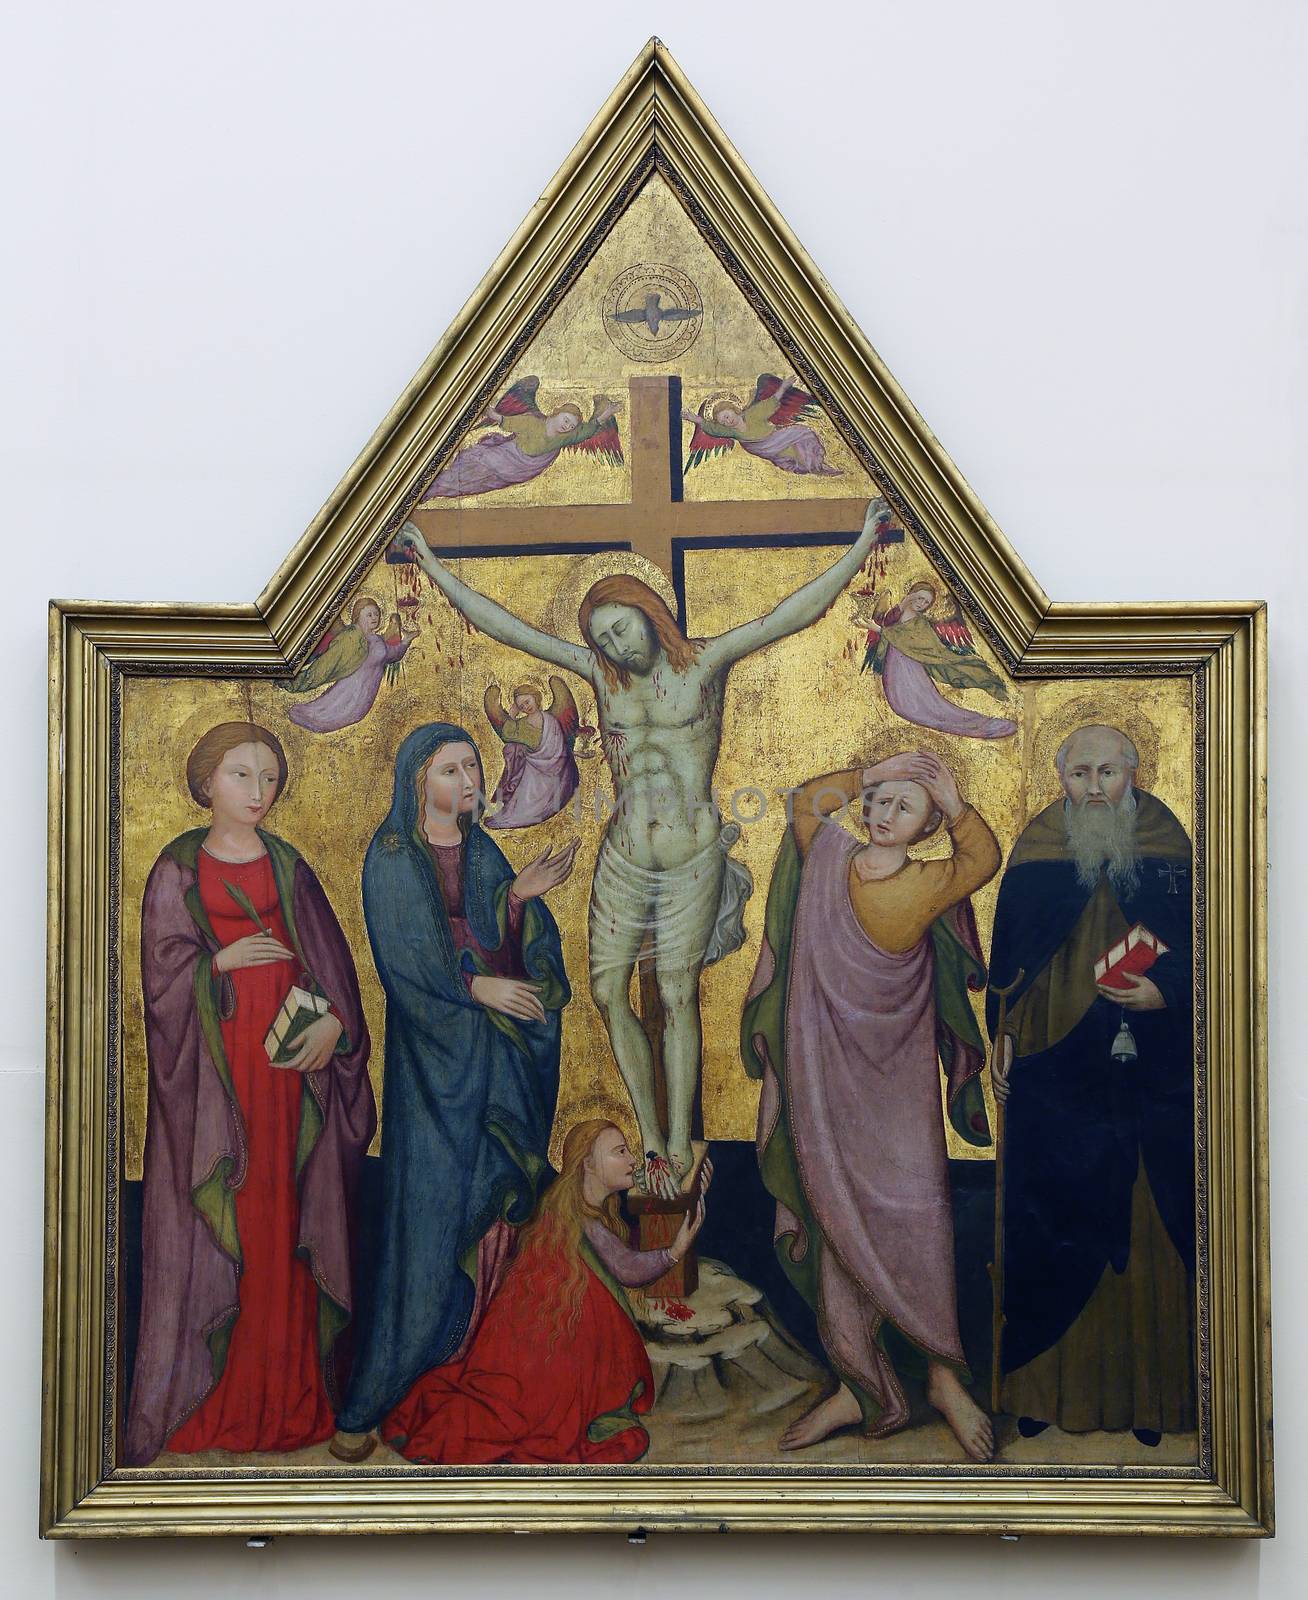 Maestro di San Verecondo: Crucifixion with Saints, Old Masters Collection, Croatian Academy of Sciences in Zagreb, Croatia